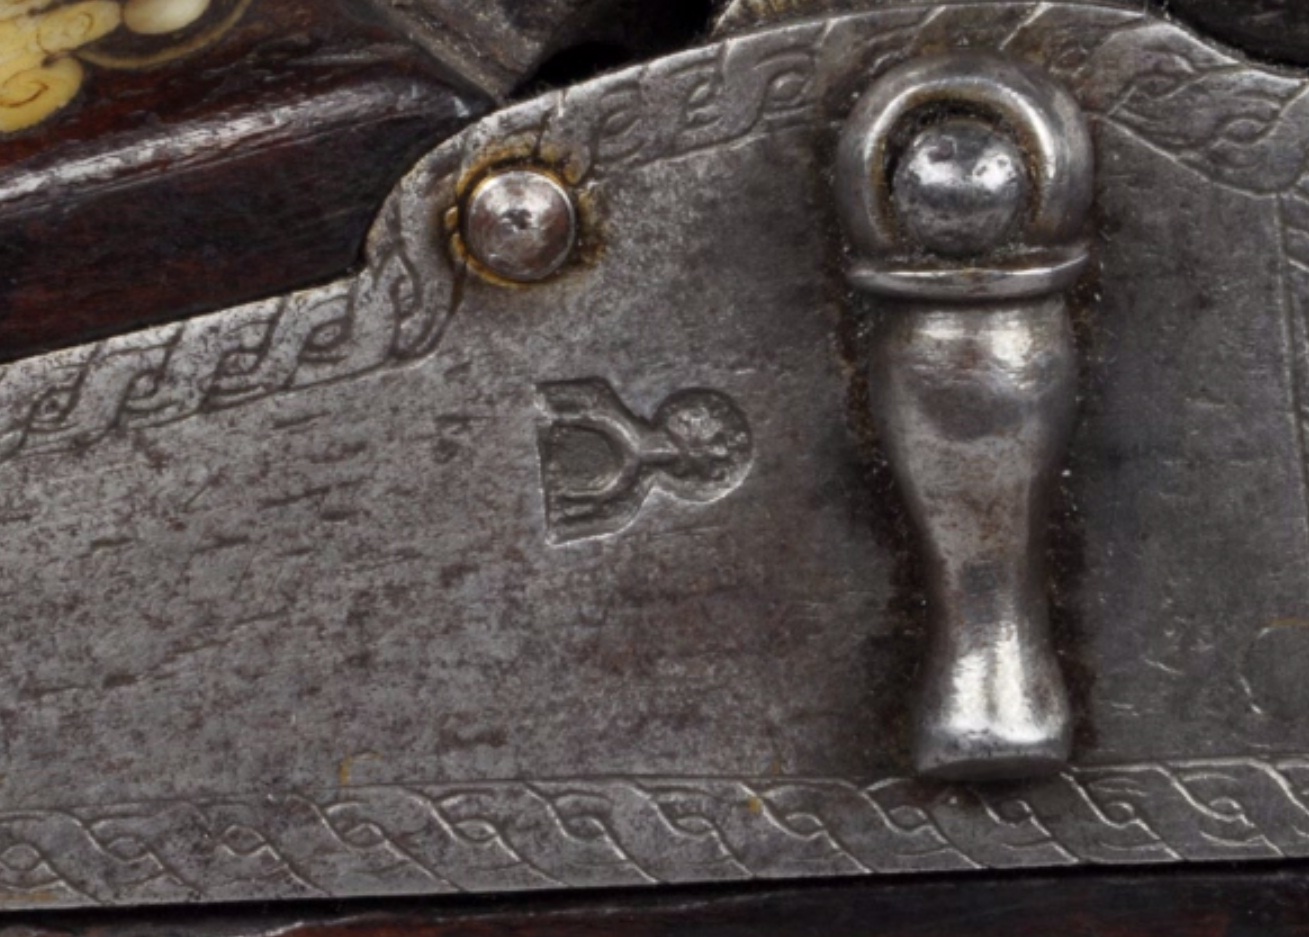 The worlds oldest revolver